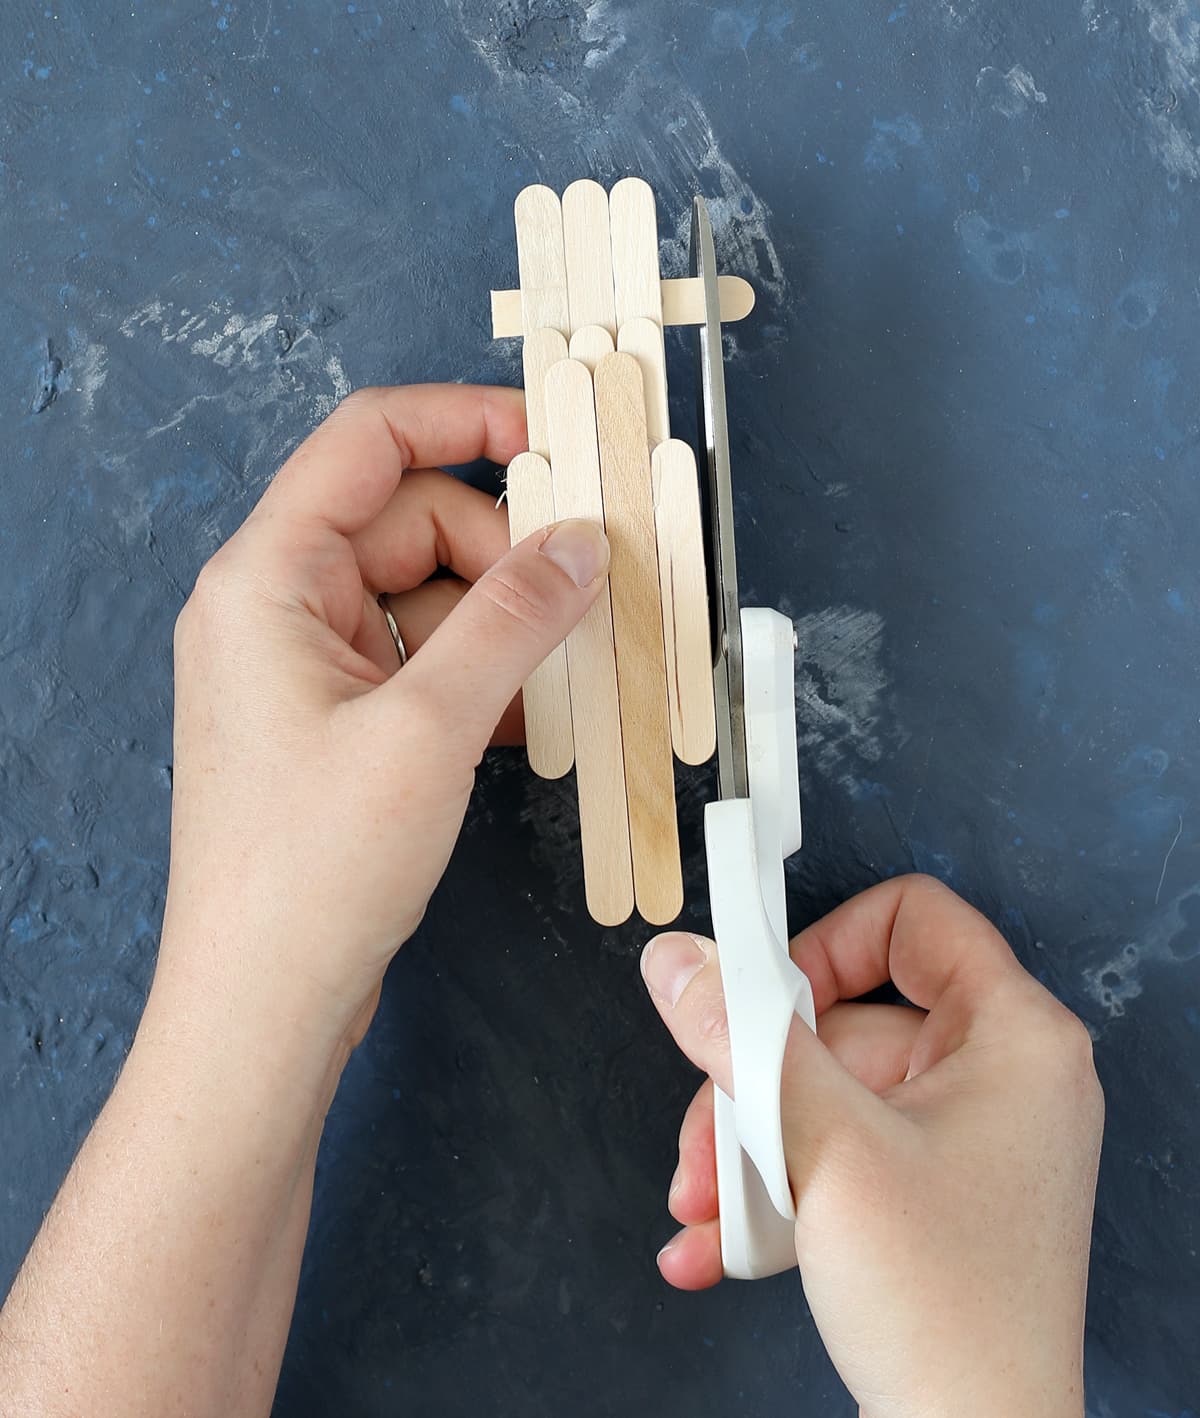 cut craft sticks with scissors